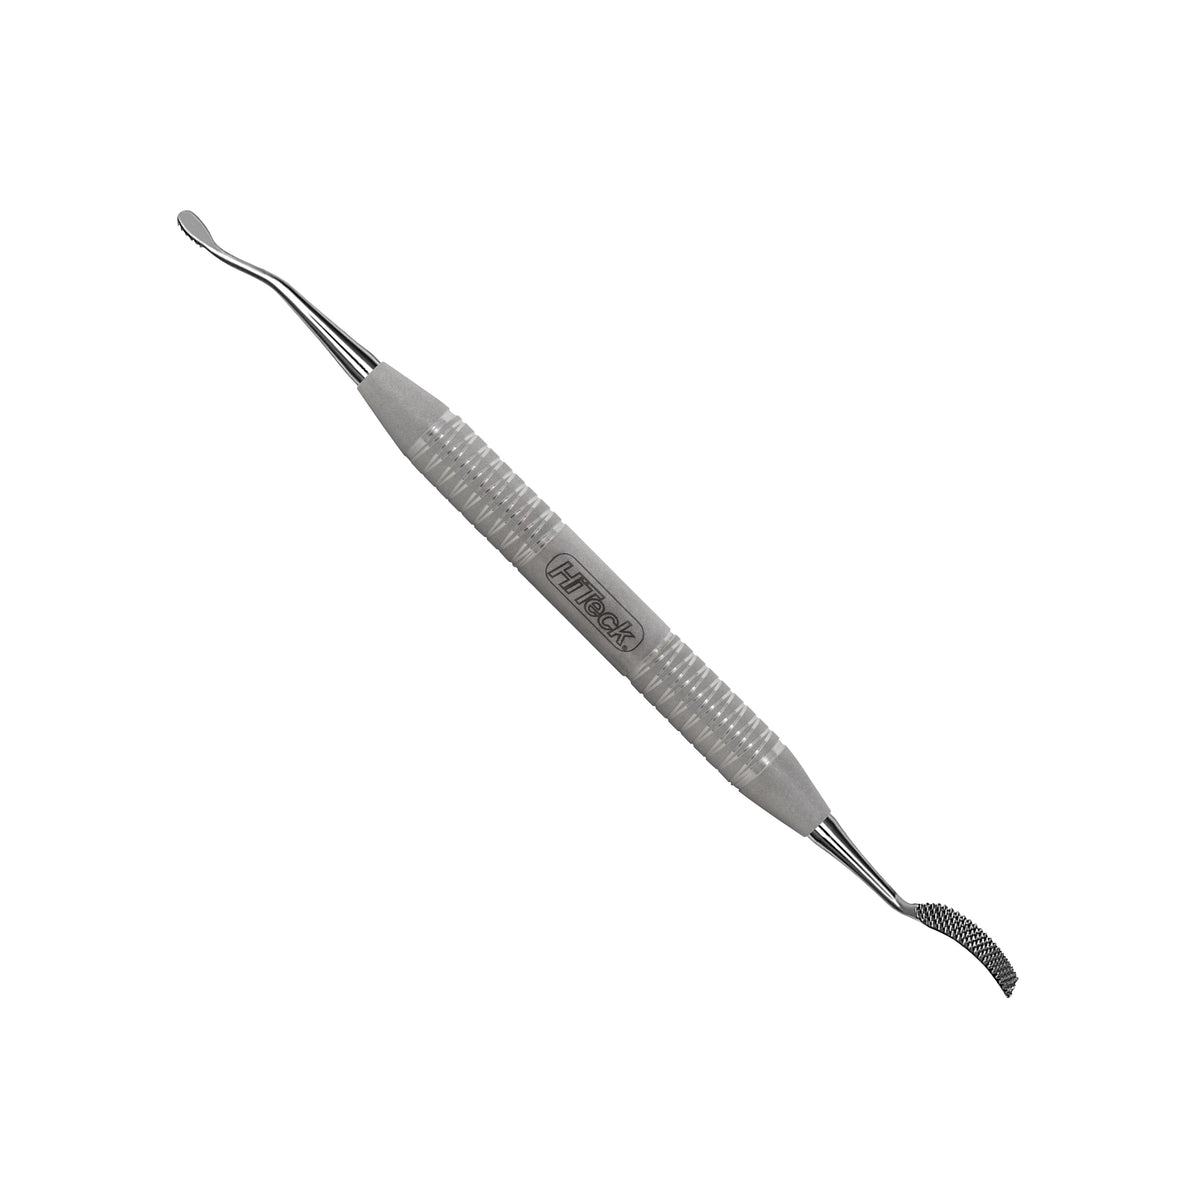 3X Miller Colburn, Cross Cut Surgical Bone File - HiTeck Medical Instruments